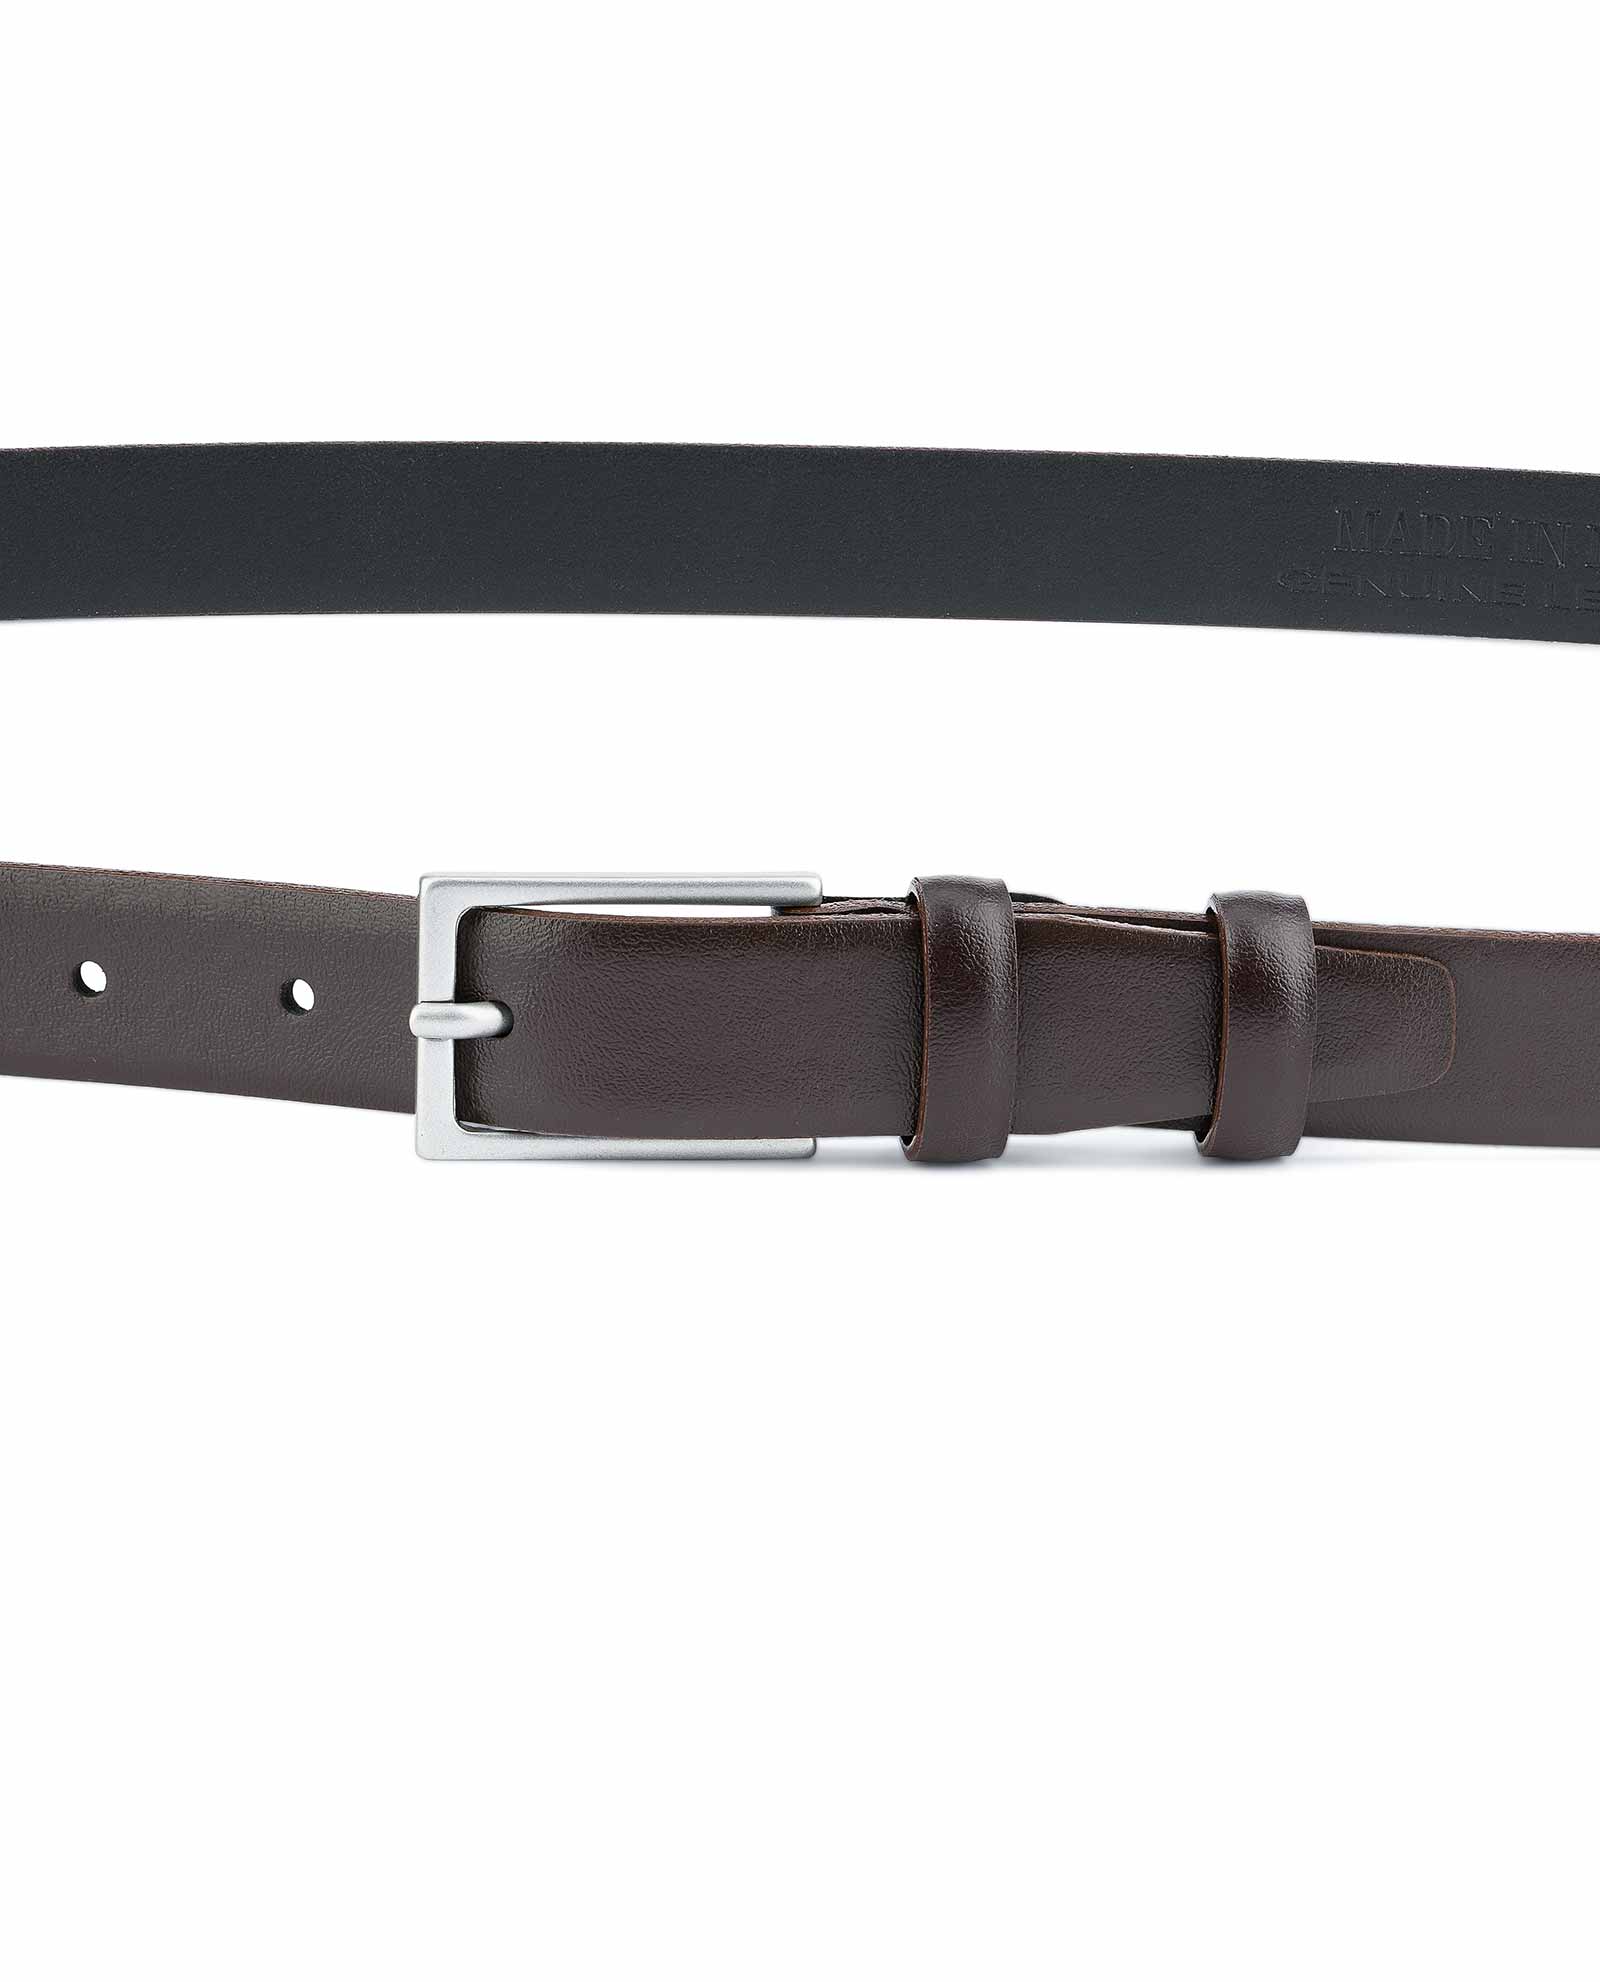 Ladies And Men’s Genuine Leather Belt Brown Colour Size L 45mm WideX115cm Long 